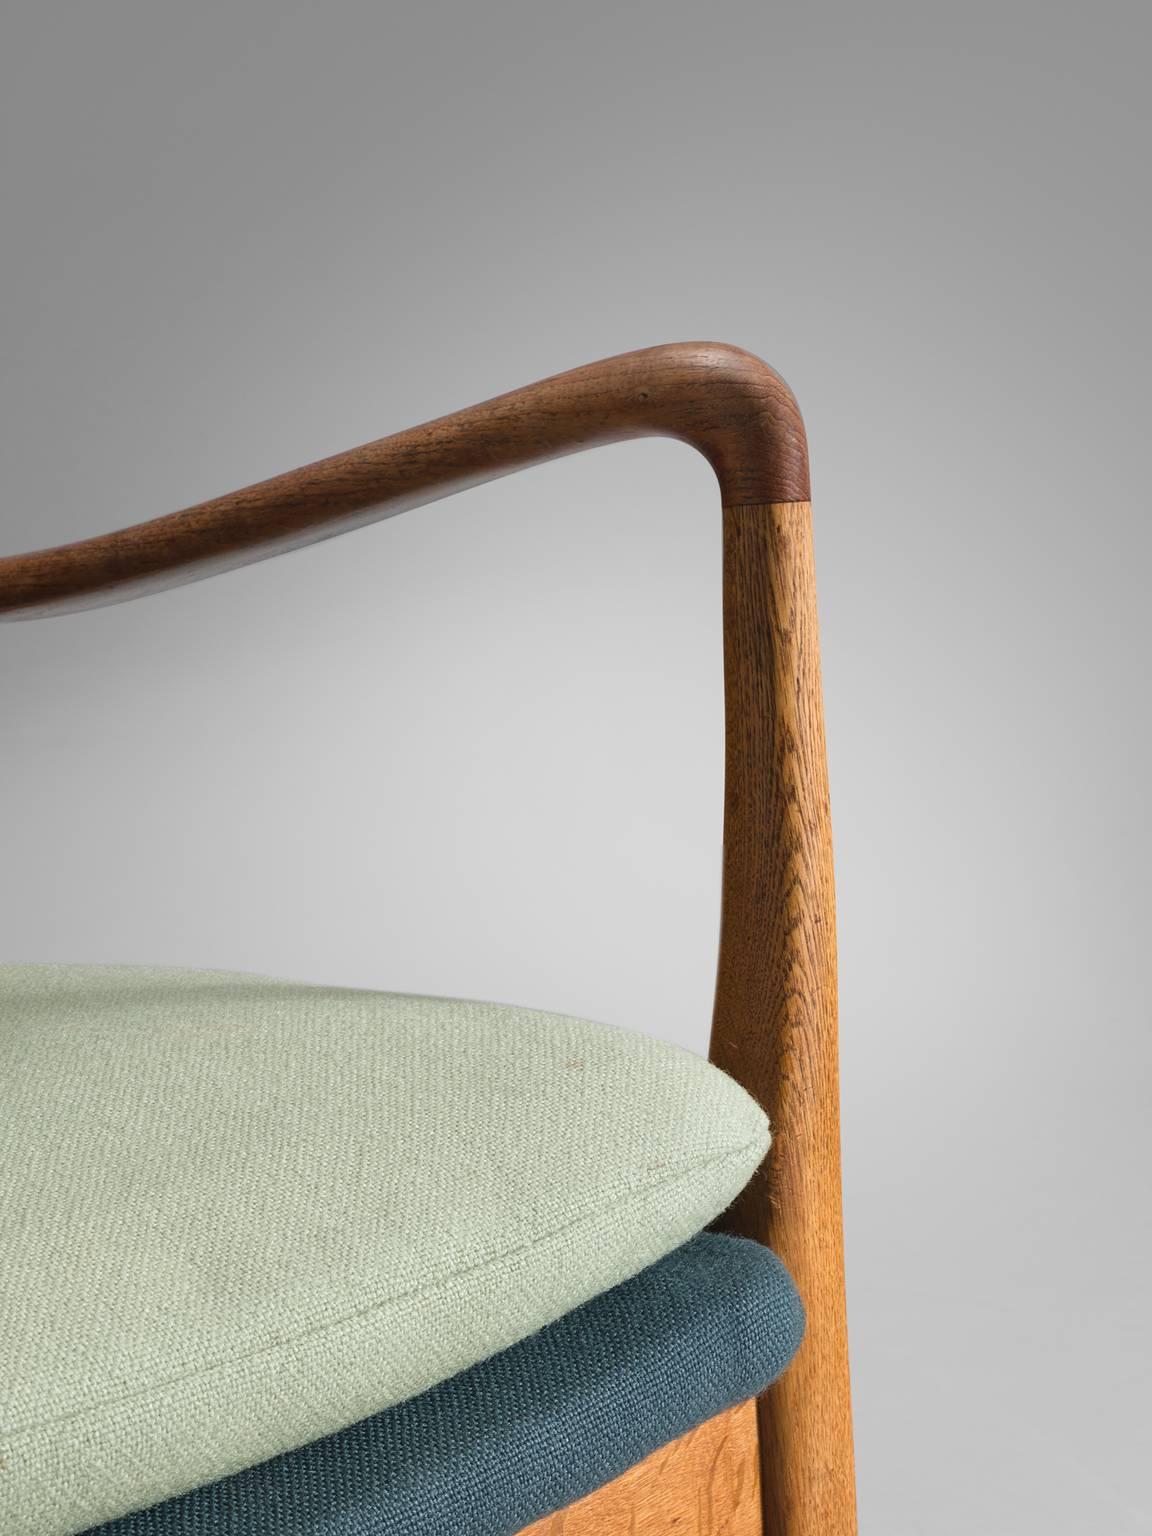 Fabric Aksel Bender Madsen Teak and Oak Lounge Chair